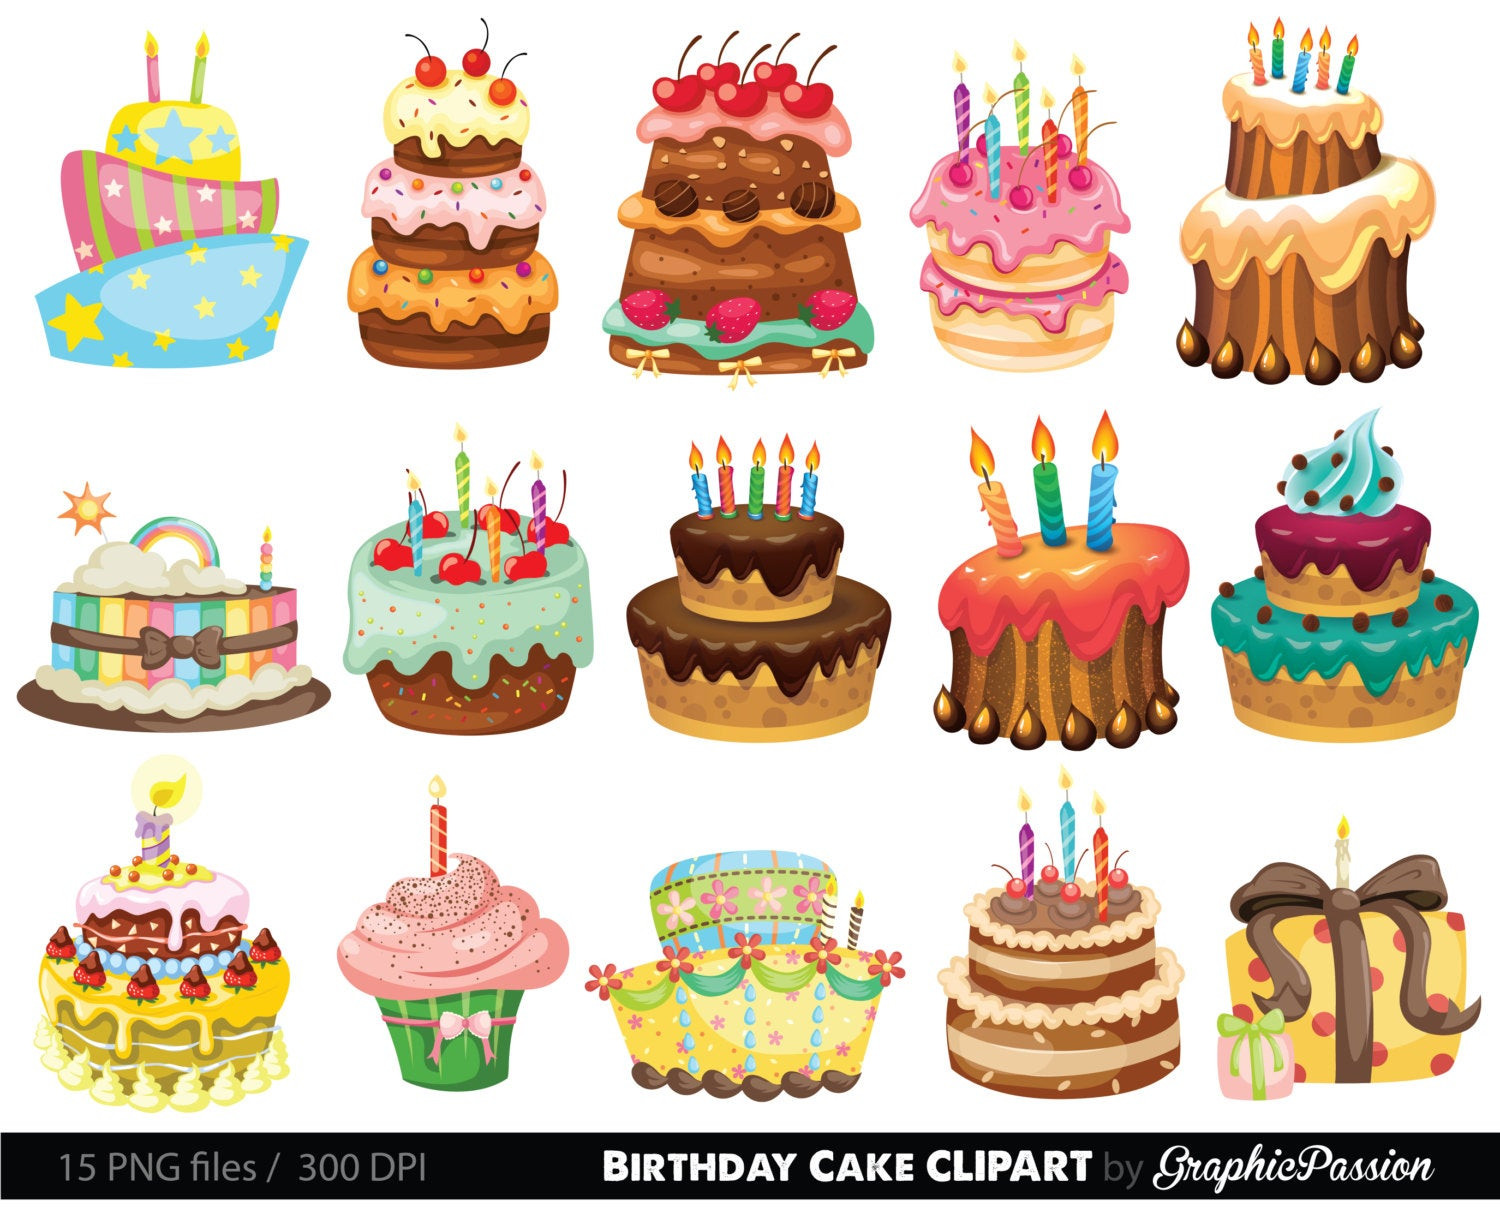 Best ideas about Birthday Cake Illustration
. Save or Pin Birthday Cake Clipart Cake Illustration Birthday Cake Now.